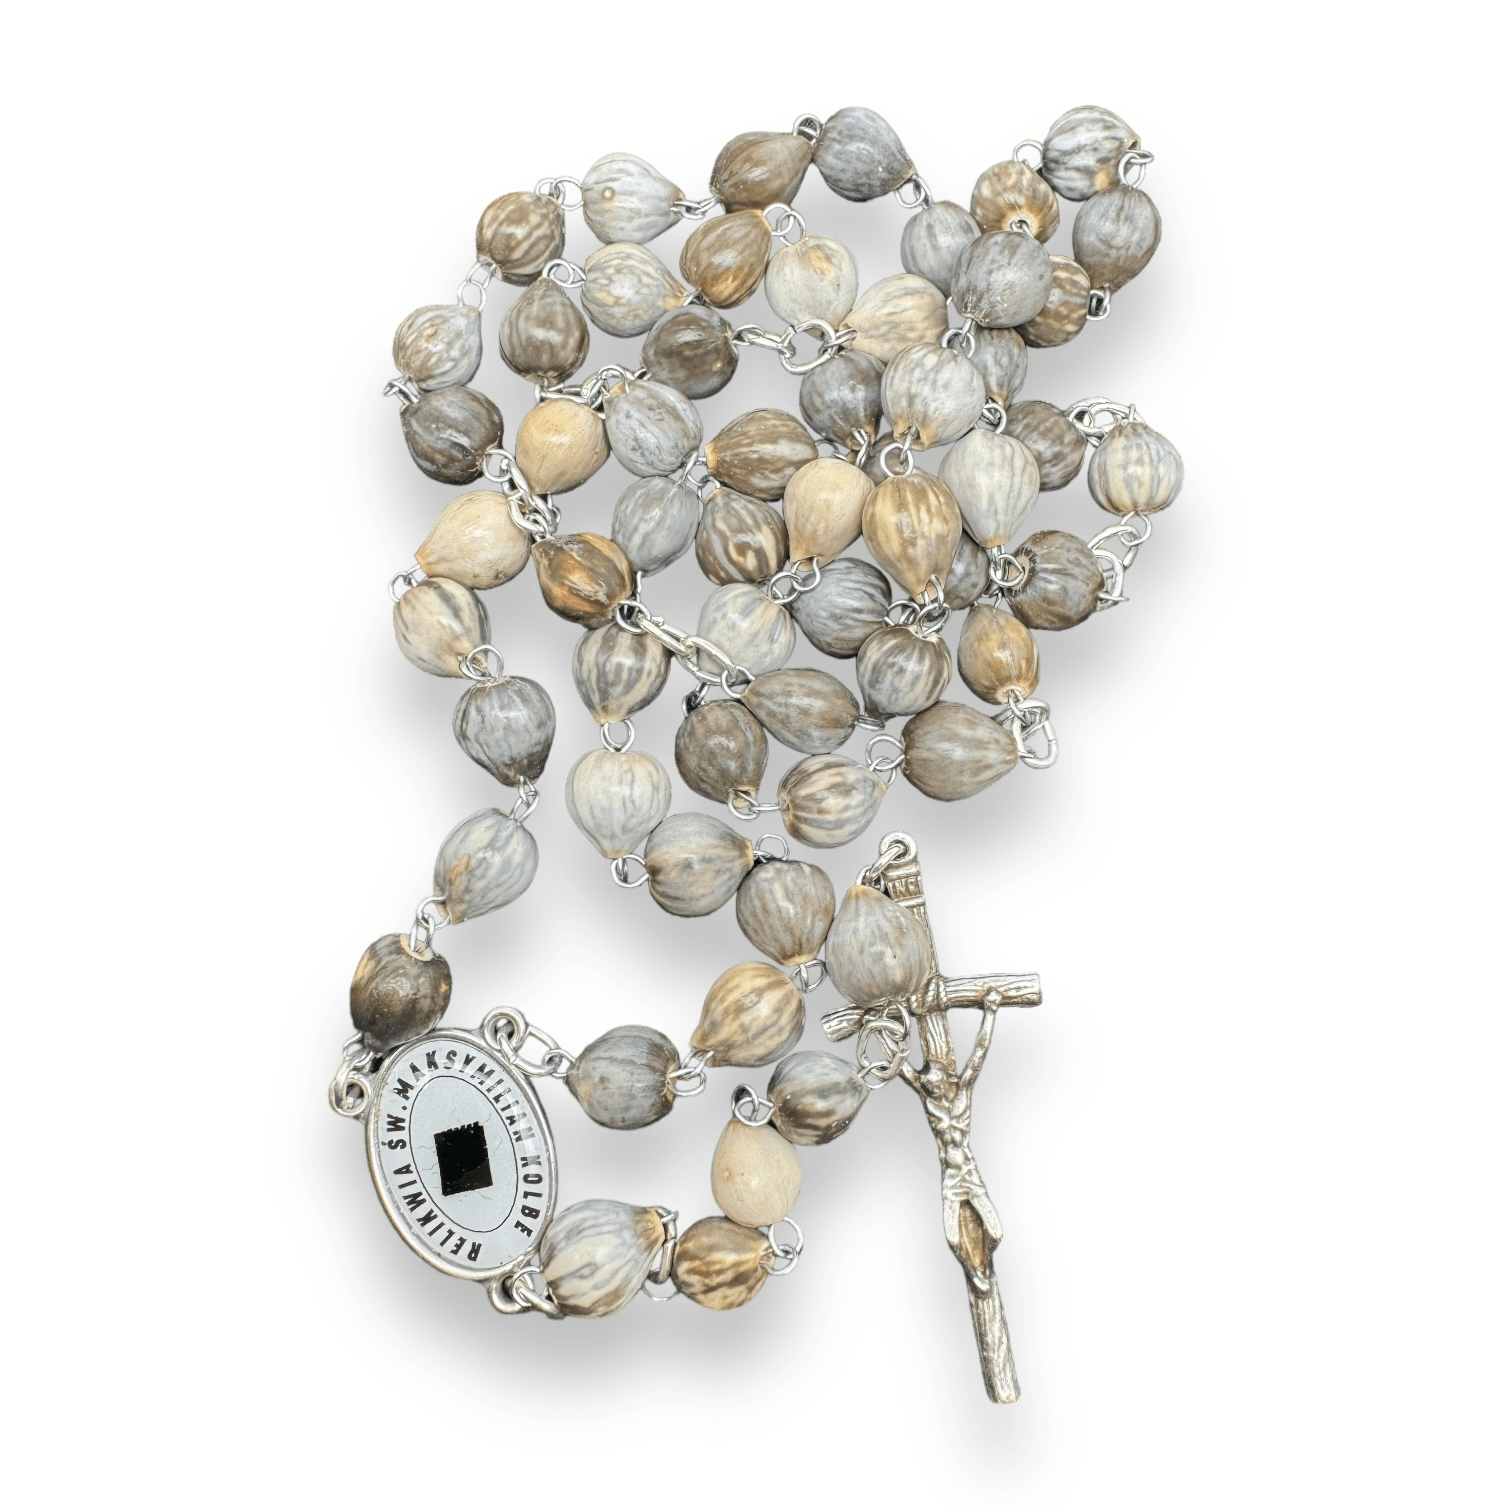 Catholically Saint Kolbe Relic Wooden Rosary - Handcrafted Spiritual Keepsake